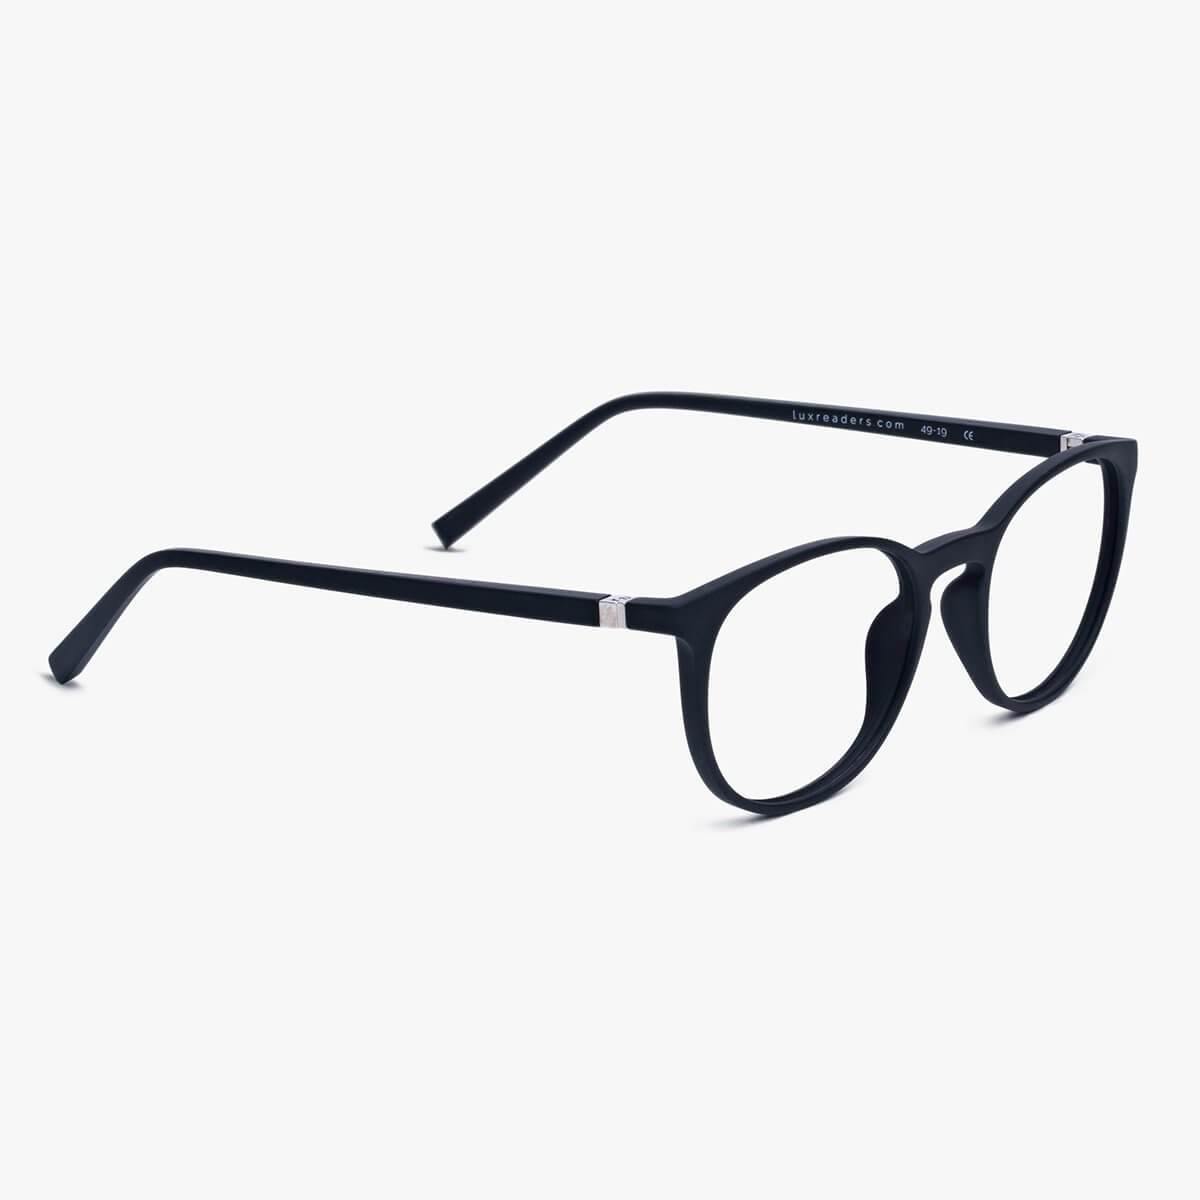 Trendy Funky Black Leesbril met Luipaardprint Accessoires Zonnebrillen & Eyewear Leesbrillen 